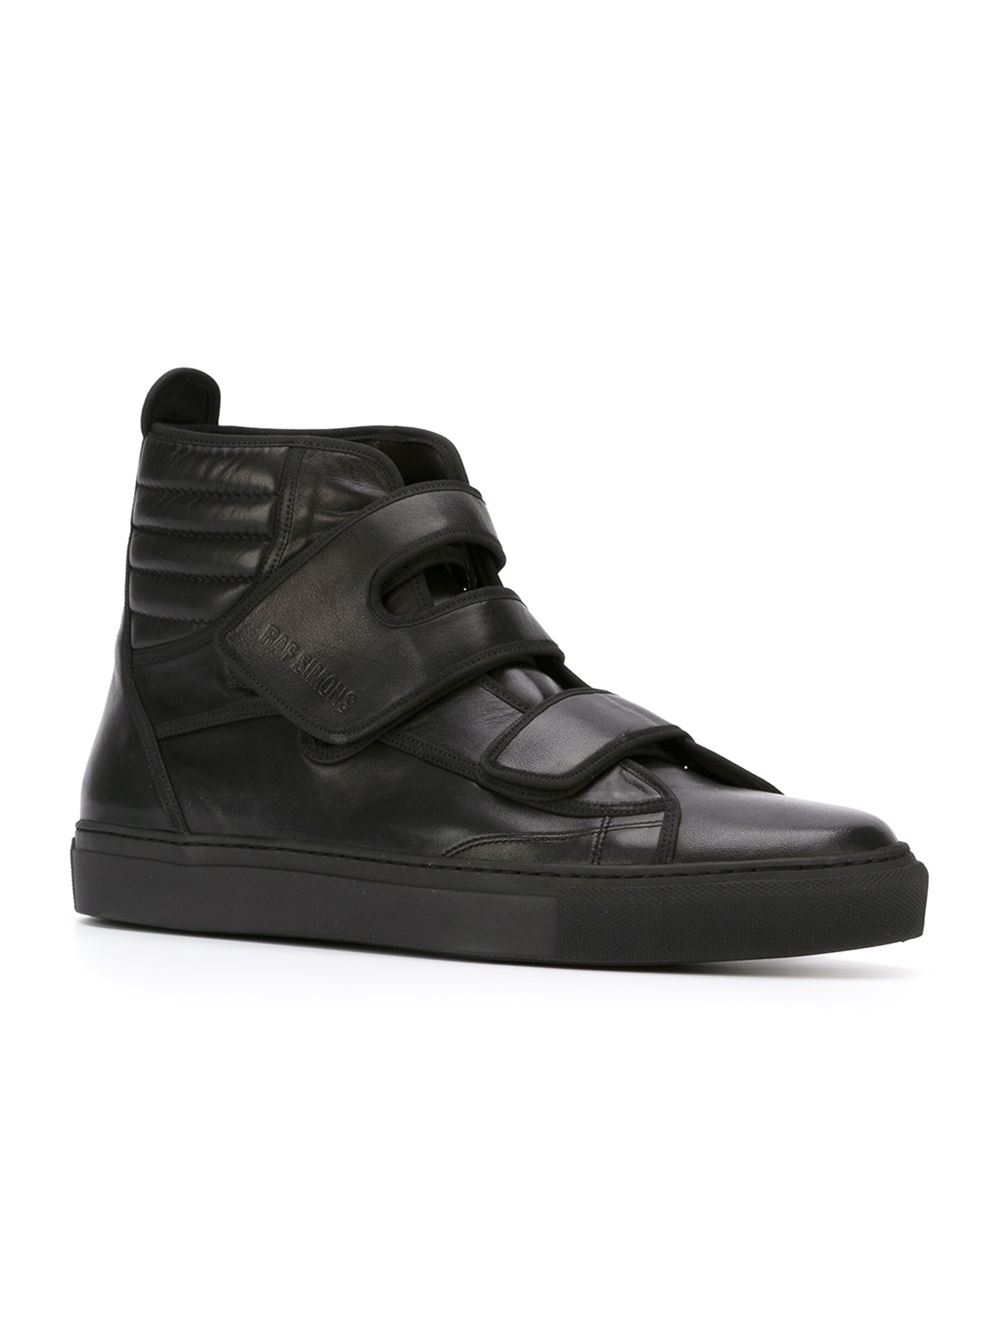 Raf Simons Leather Velcro Fastening Hi-top Sneakers in Black for Men - Lyst